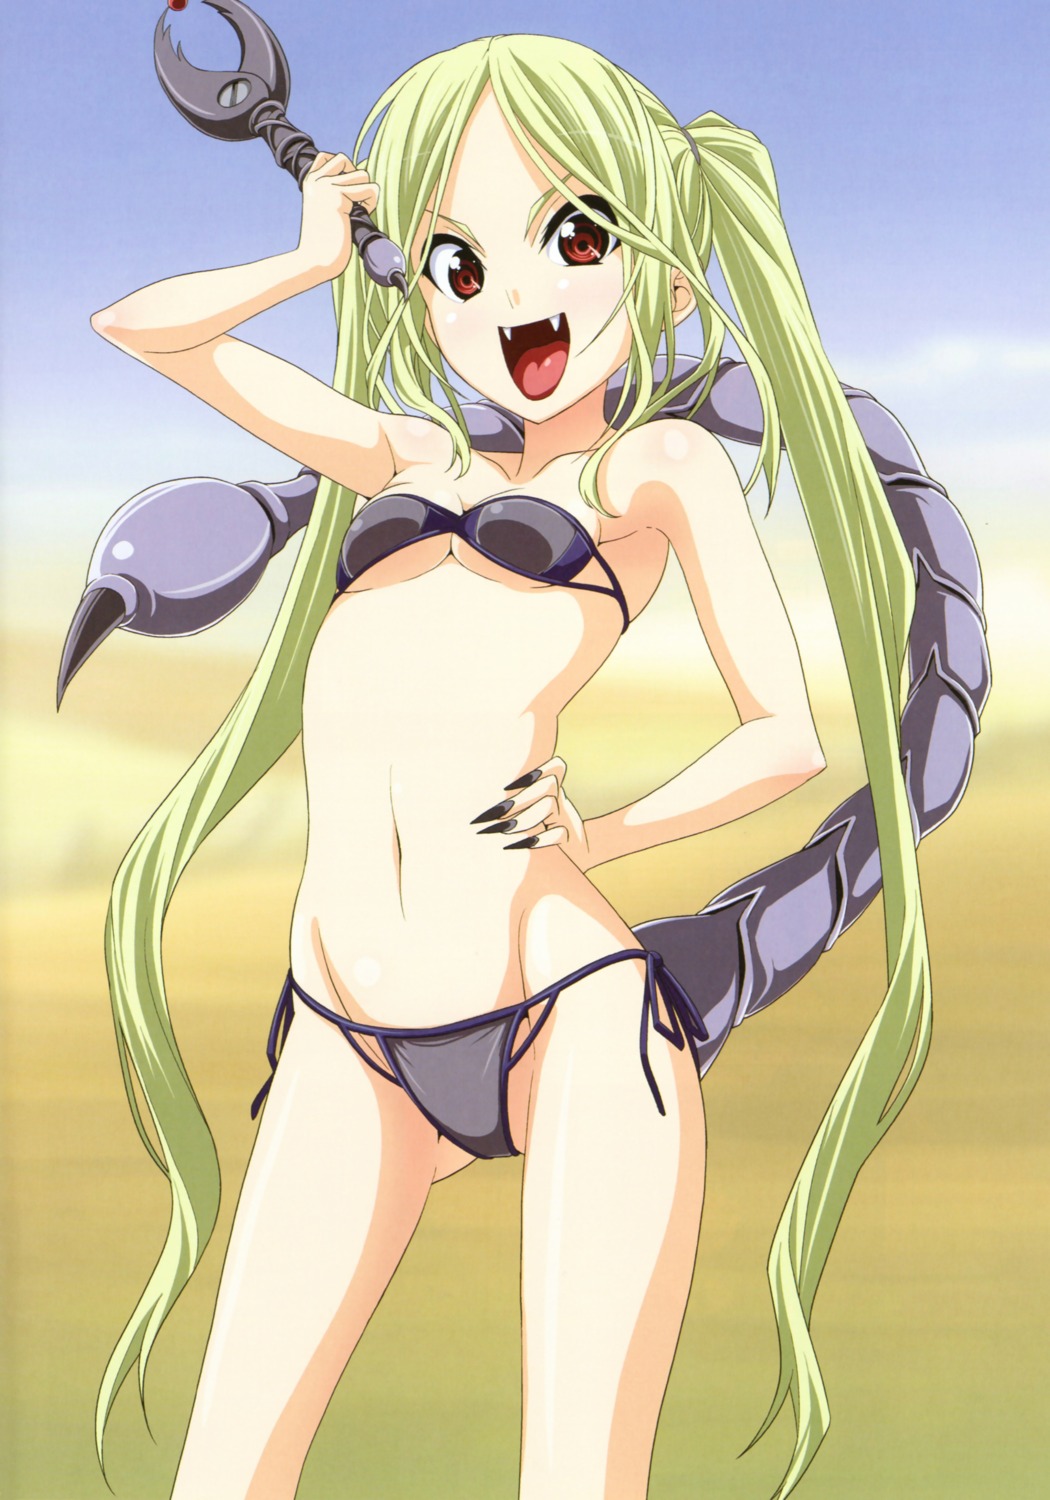 bikini cleavage genkai_tokki_monster_monpiece hiroyuki_(artist) monster_girl swimsuits tail underboob weapon